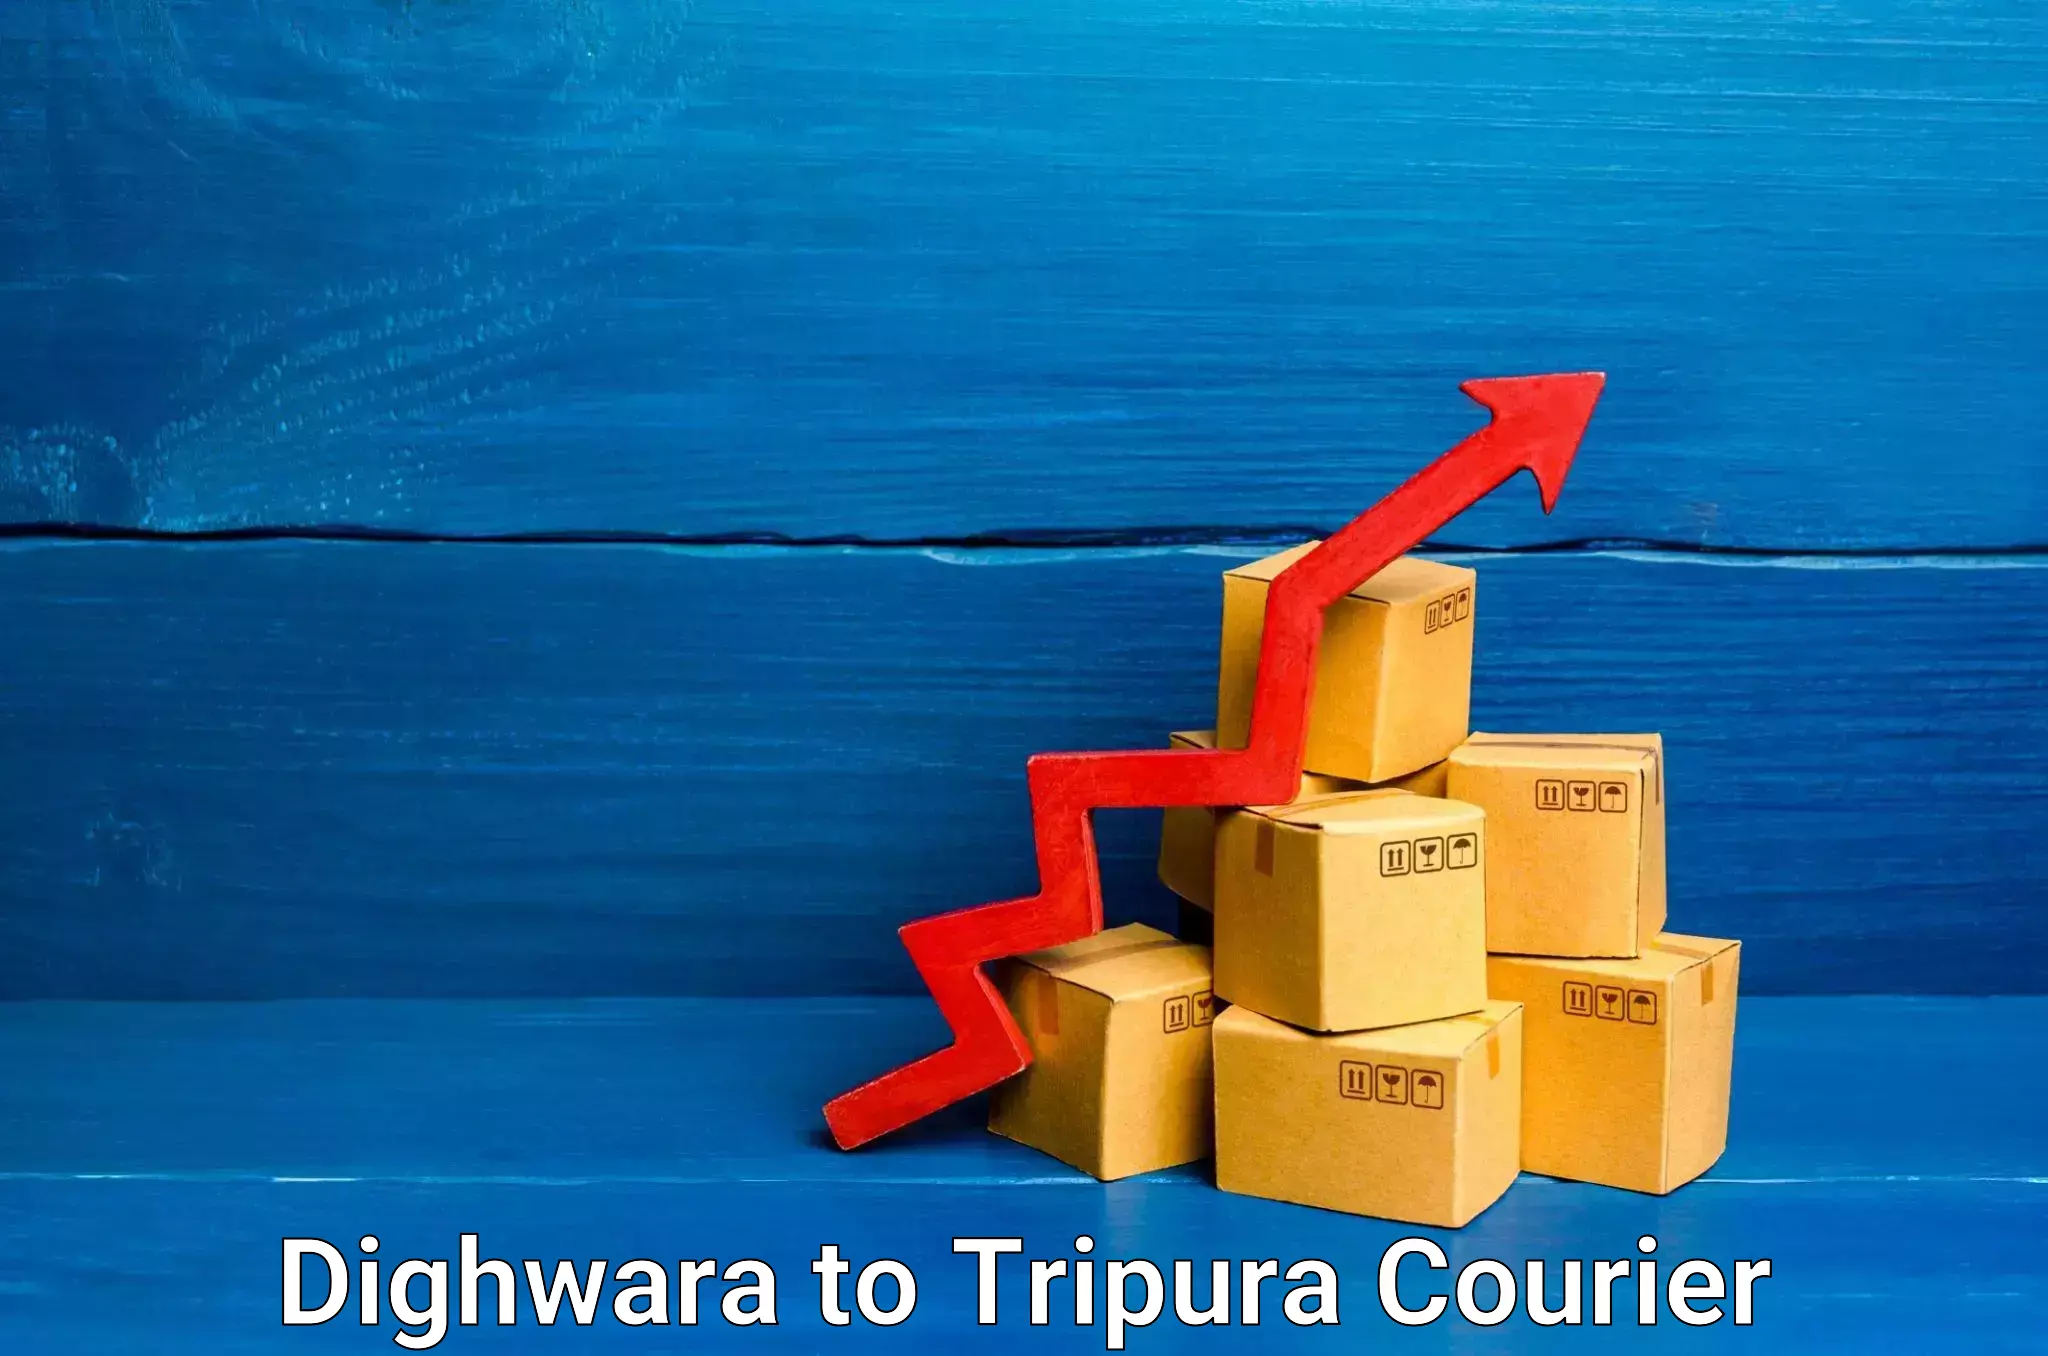 Professional furniture movers Dighwara to Udaipur Tripura